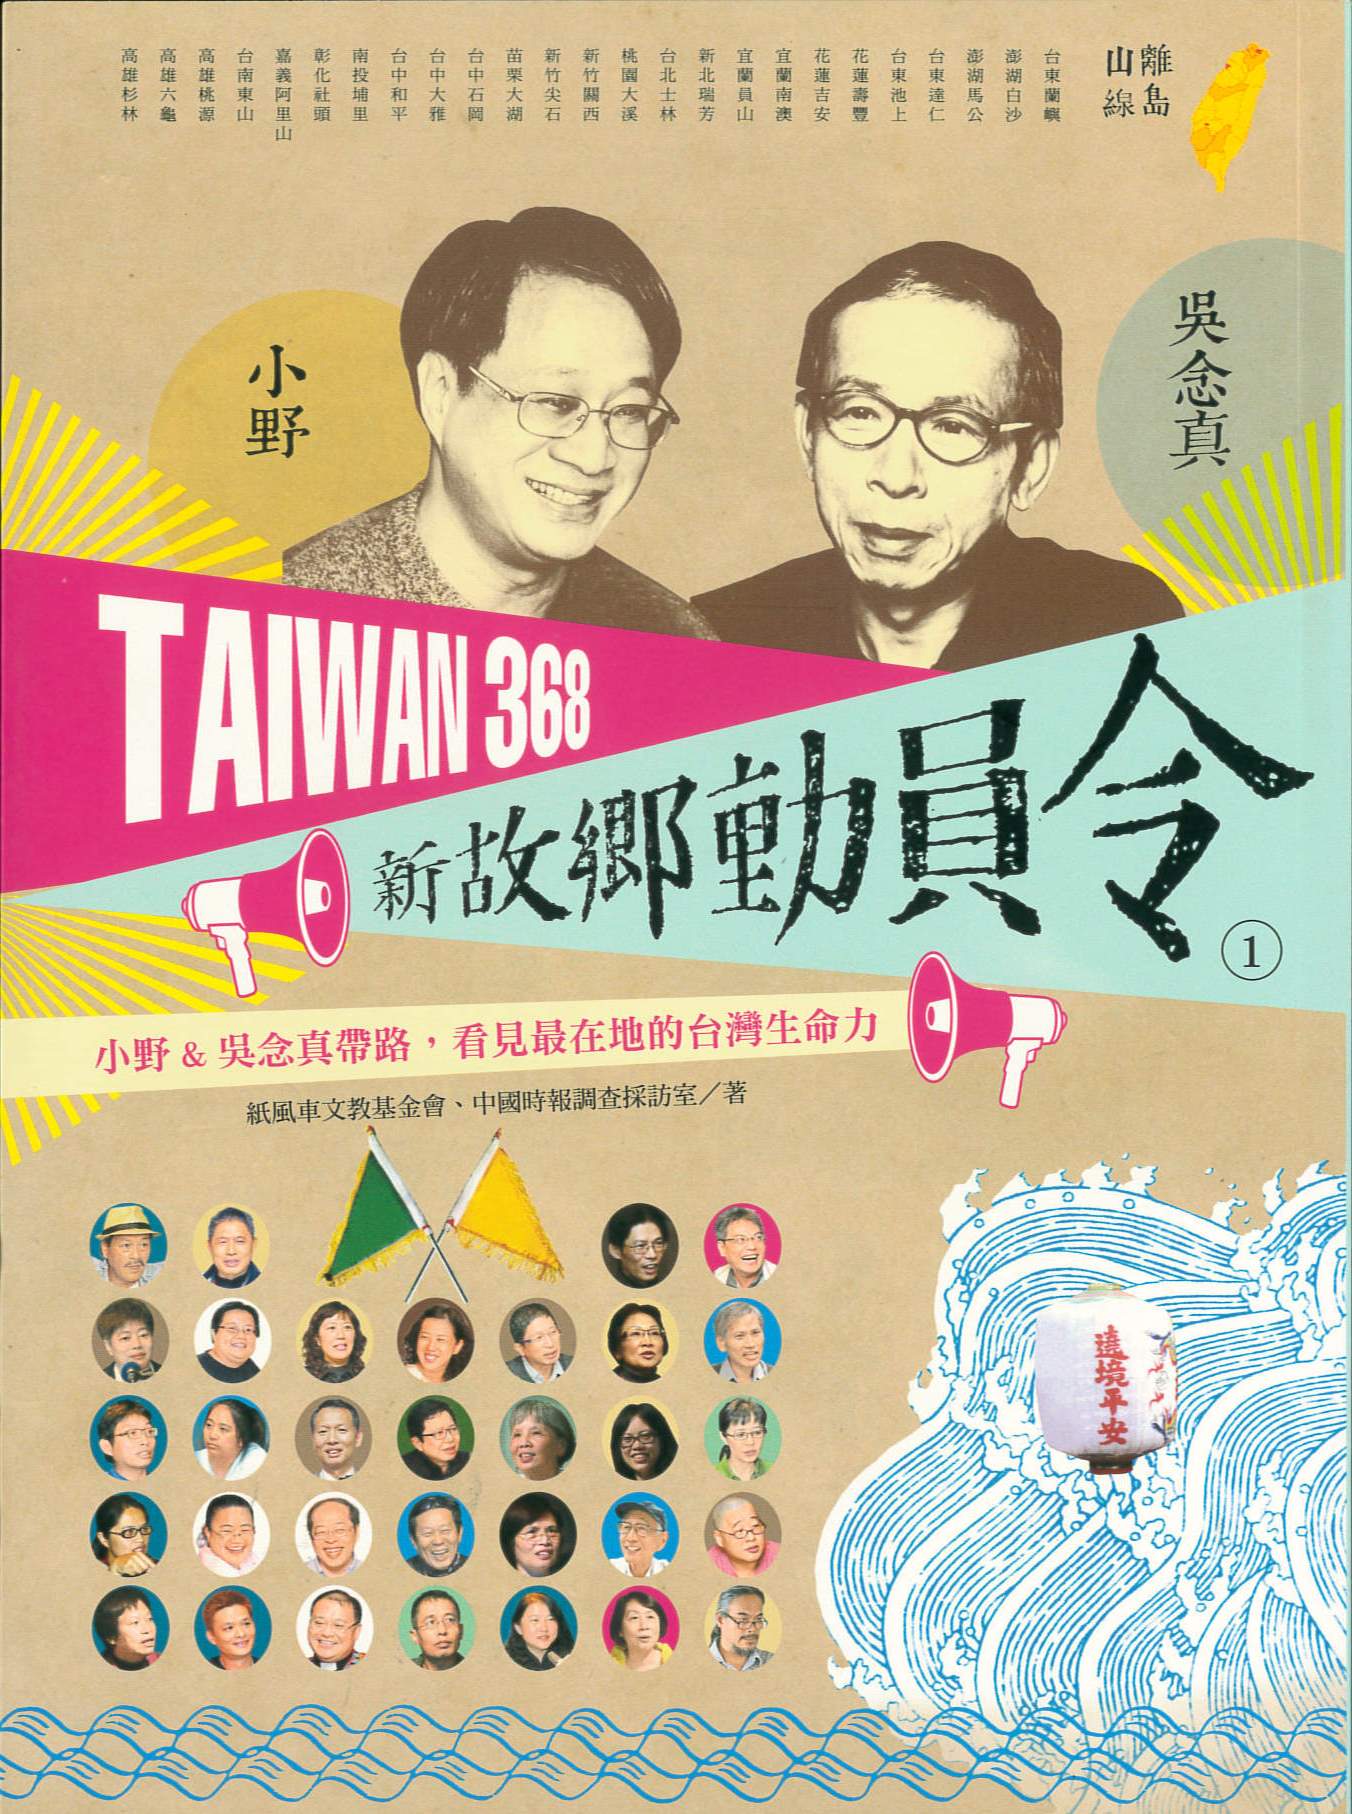 TAIWAN 368 新故鄉動員令(1) : 小野&吳念真帶路, 看見最在地的台灣生命力 /